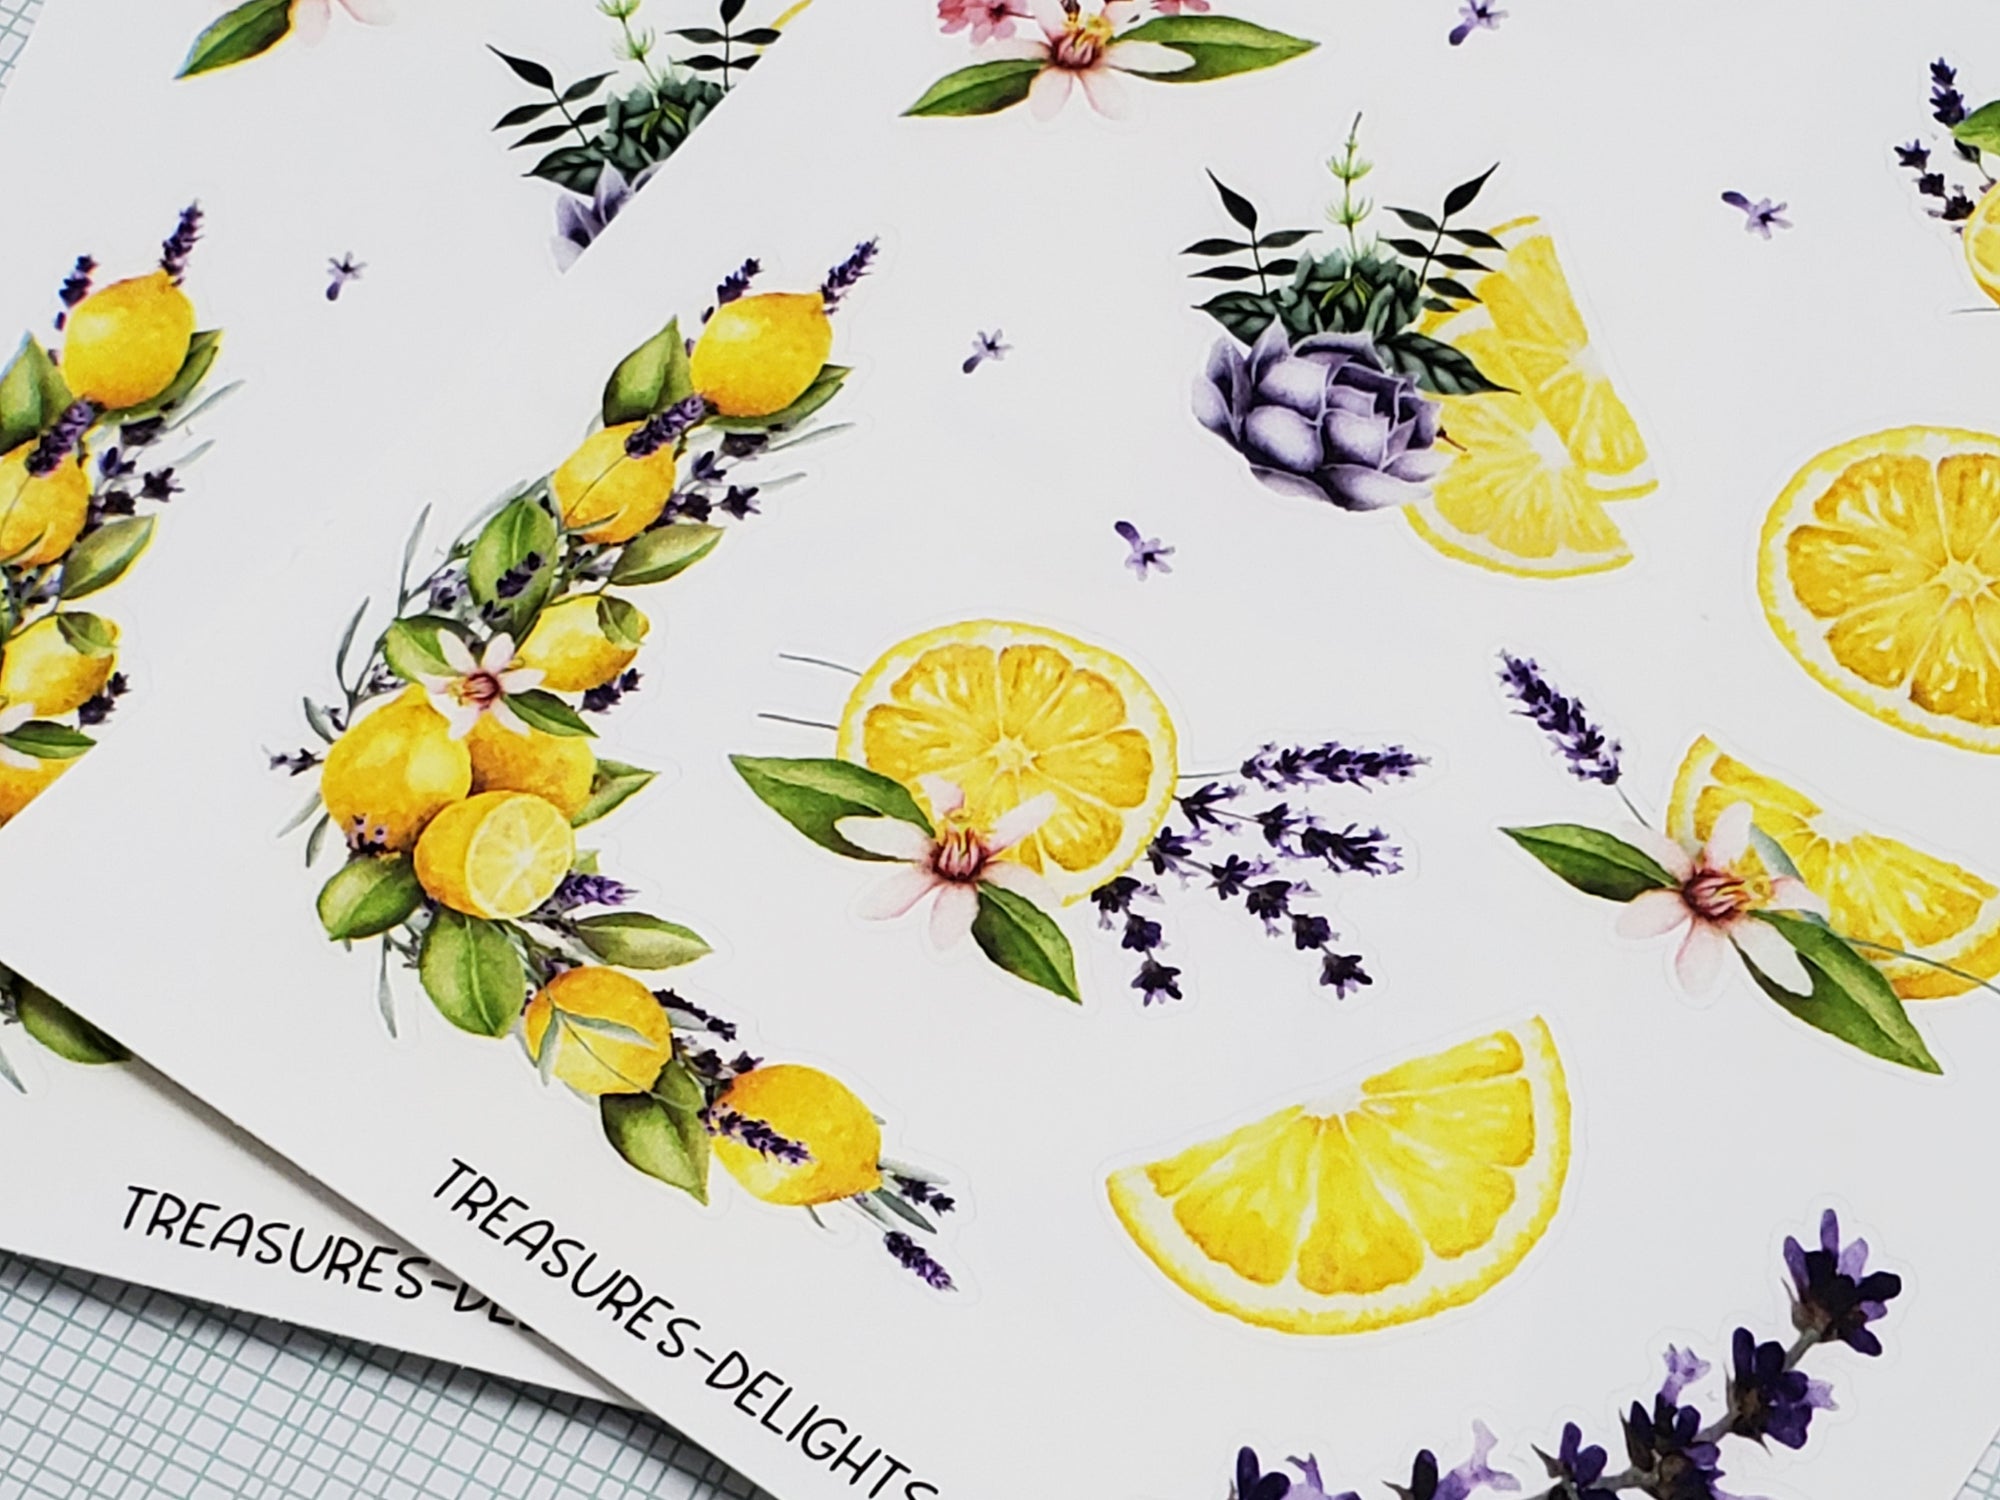 Lemons Sticker Sheet